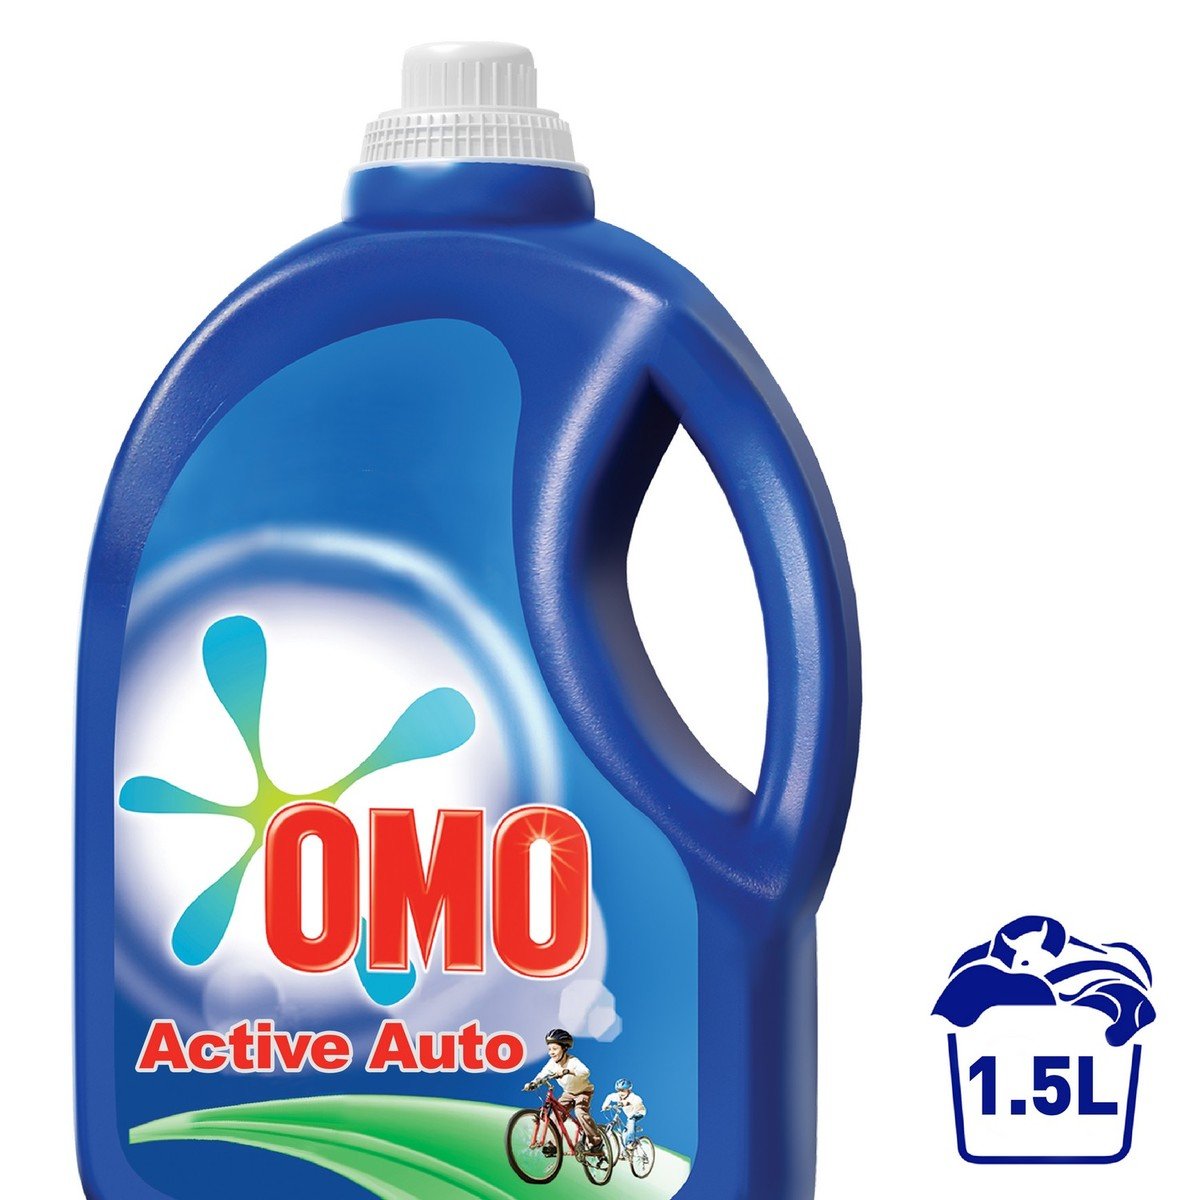 OMO Active Auto Fabric Cleaning Liquid 1.5Litre